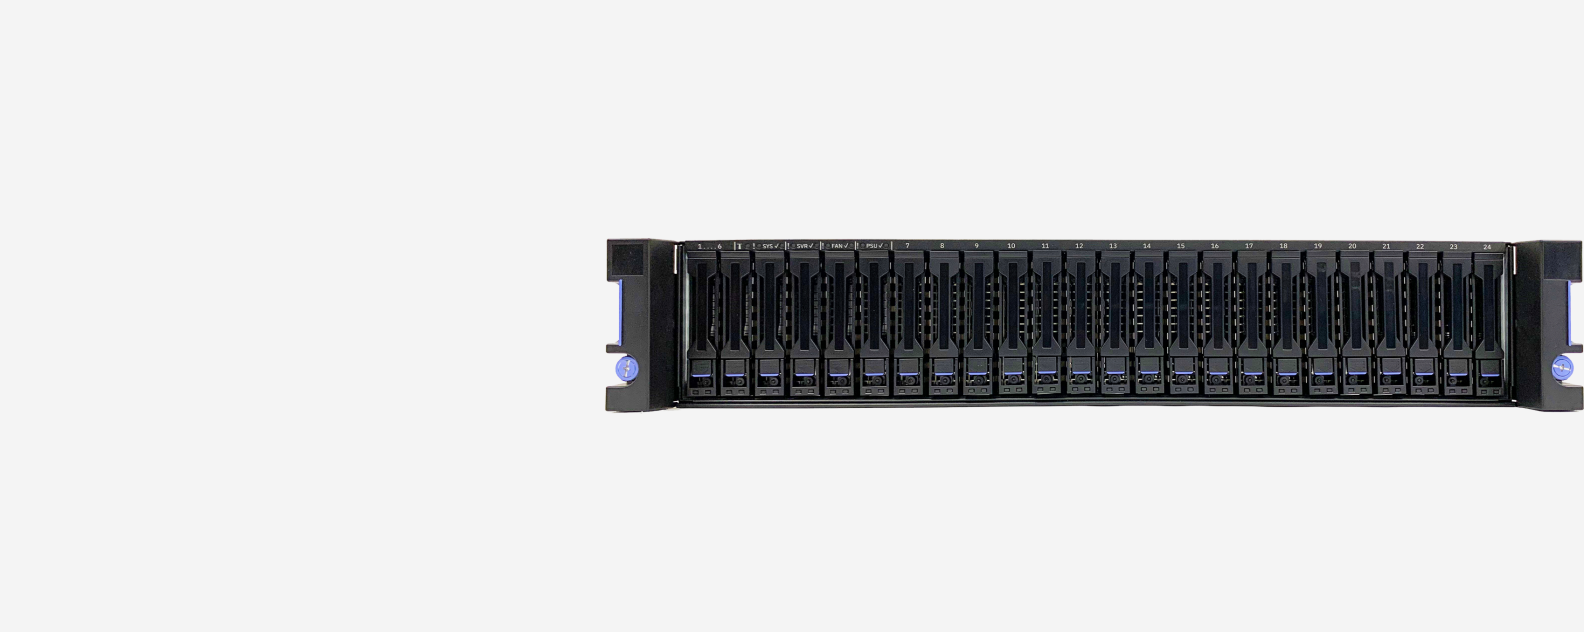 Product screenshot of IBM ESS 3500 server